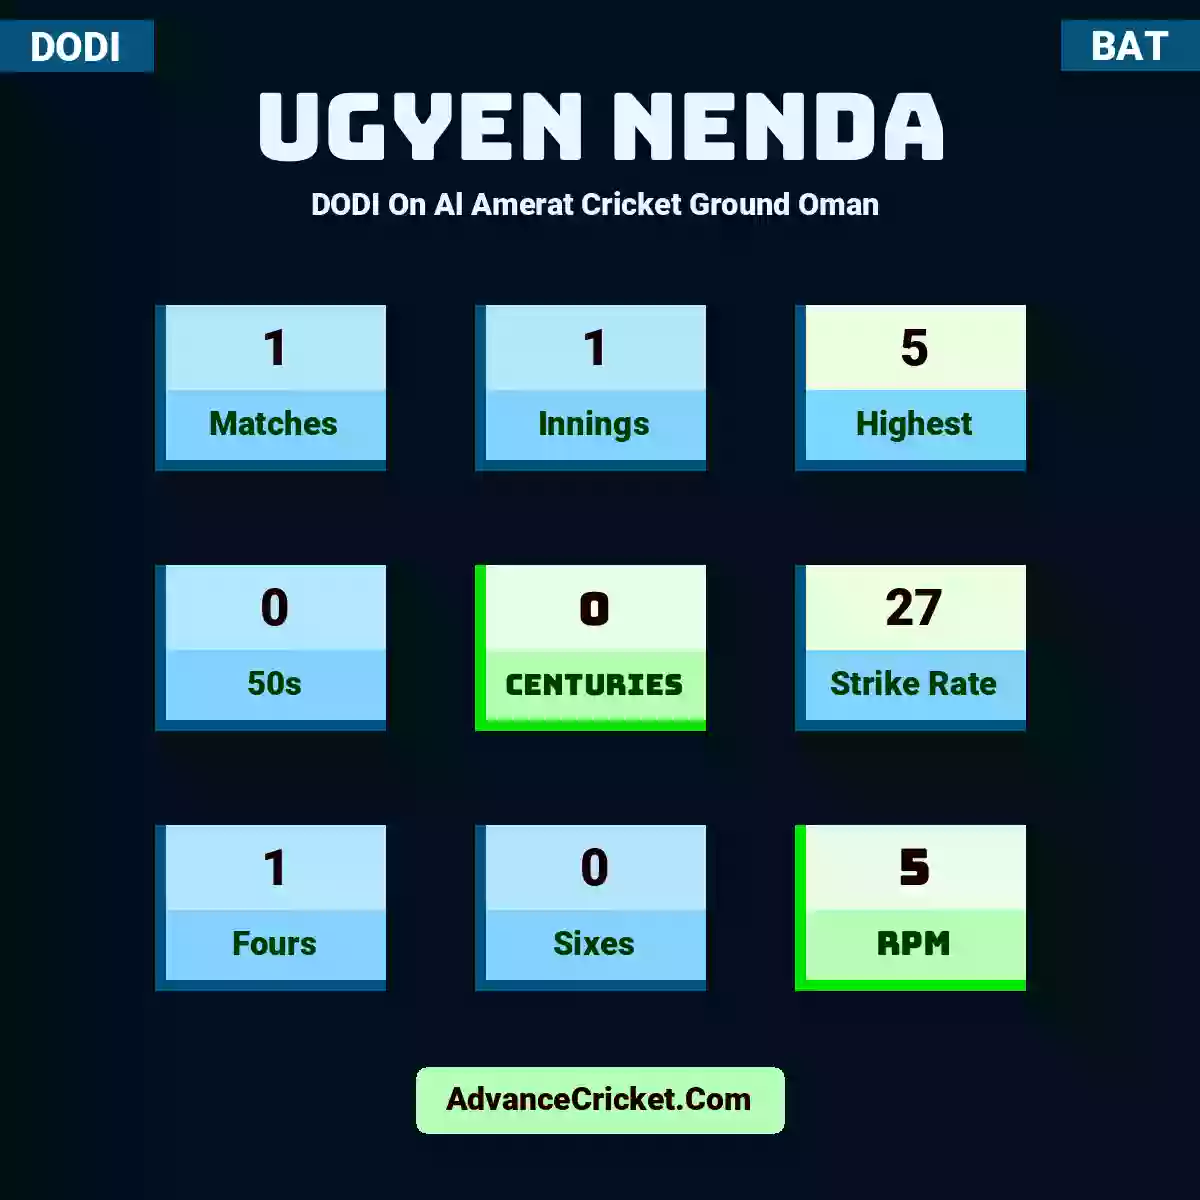 Ugyen Nenda DODI  On Al Amerat Cricket Ground Oman , Ugyen Nenda played 1 matches, scored 5 runs as highest, 0 half-centuries, and 0 centuries, with a strike rate of 27. U.Nenda hit 1 fours and 0 sixes, with an RPM of 5.